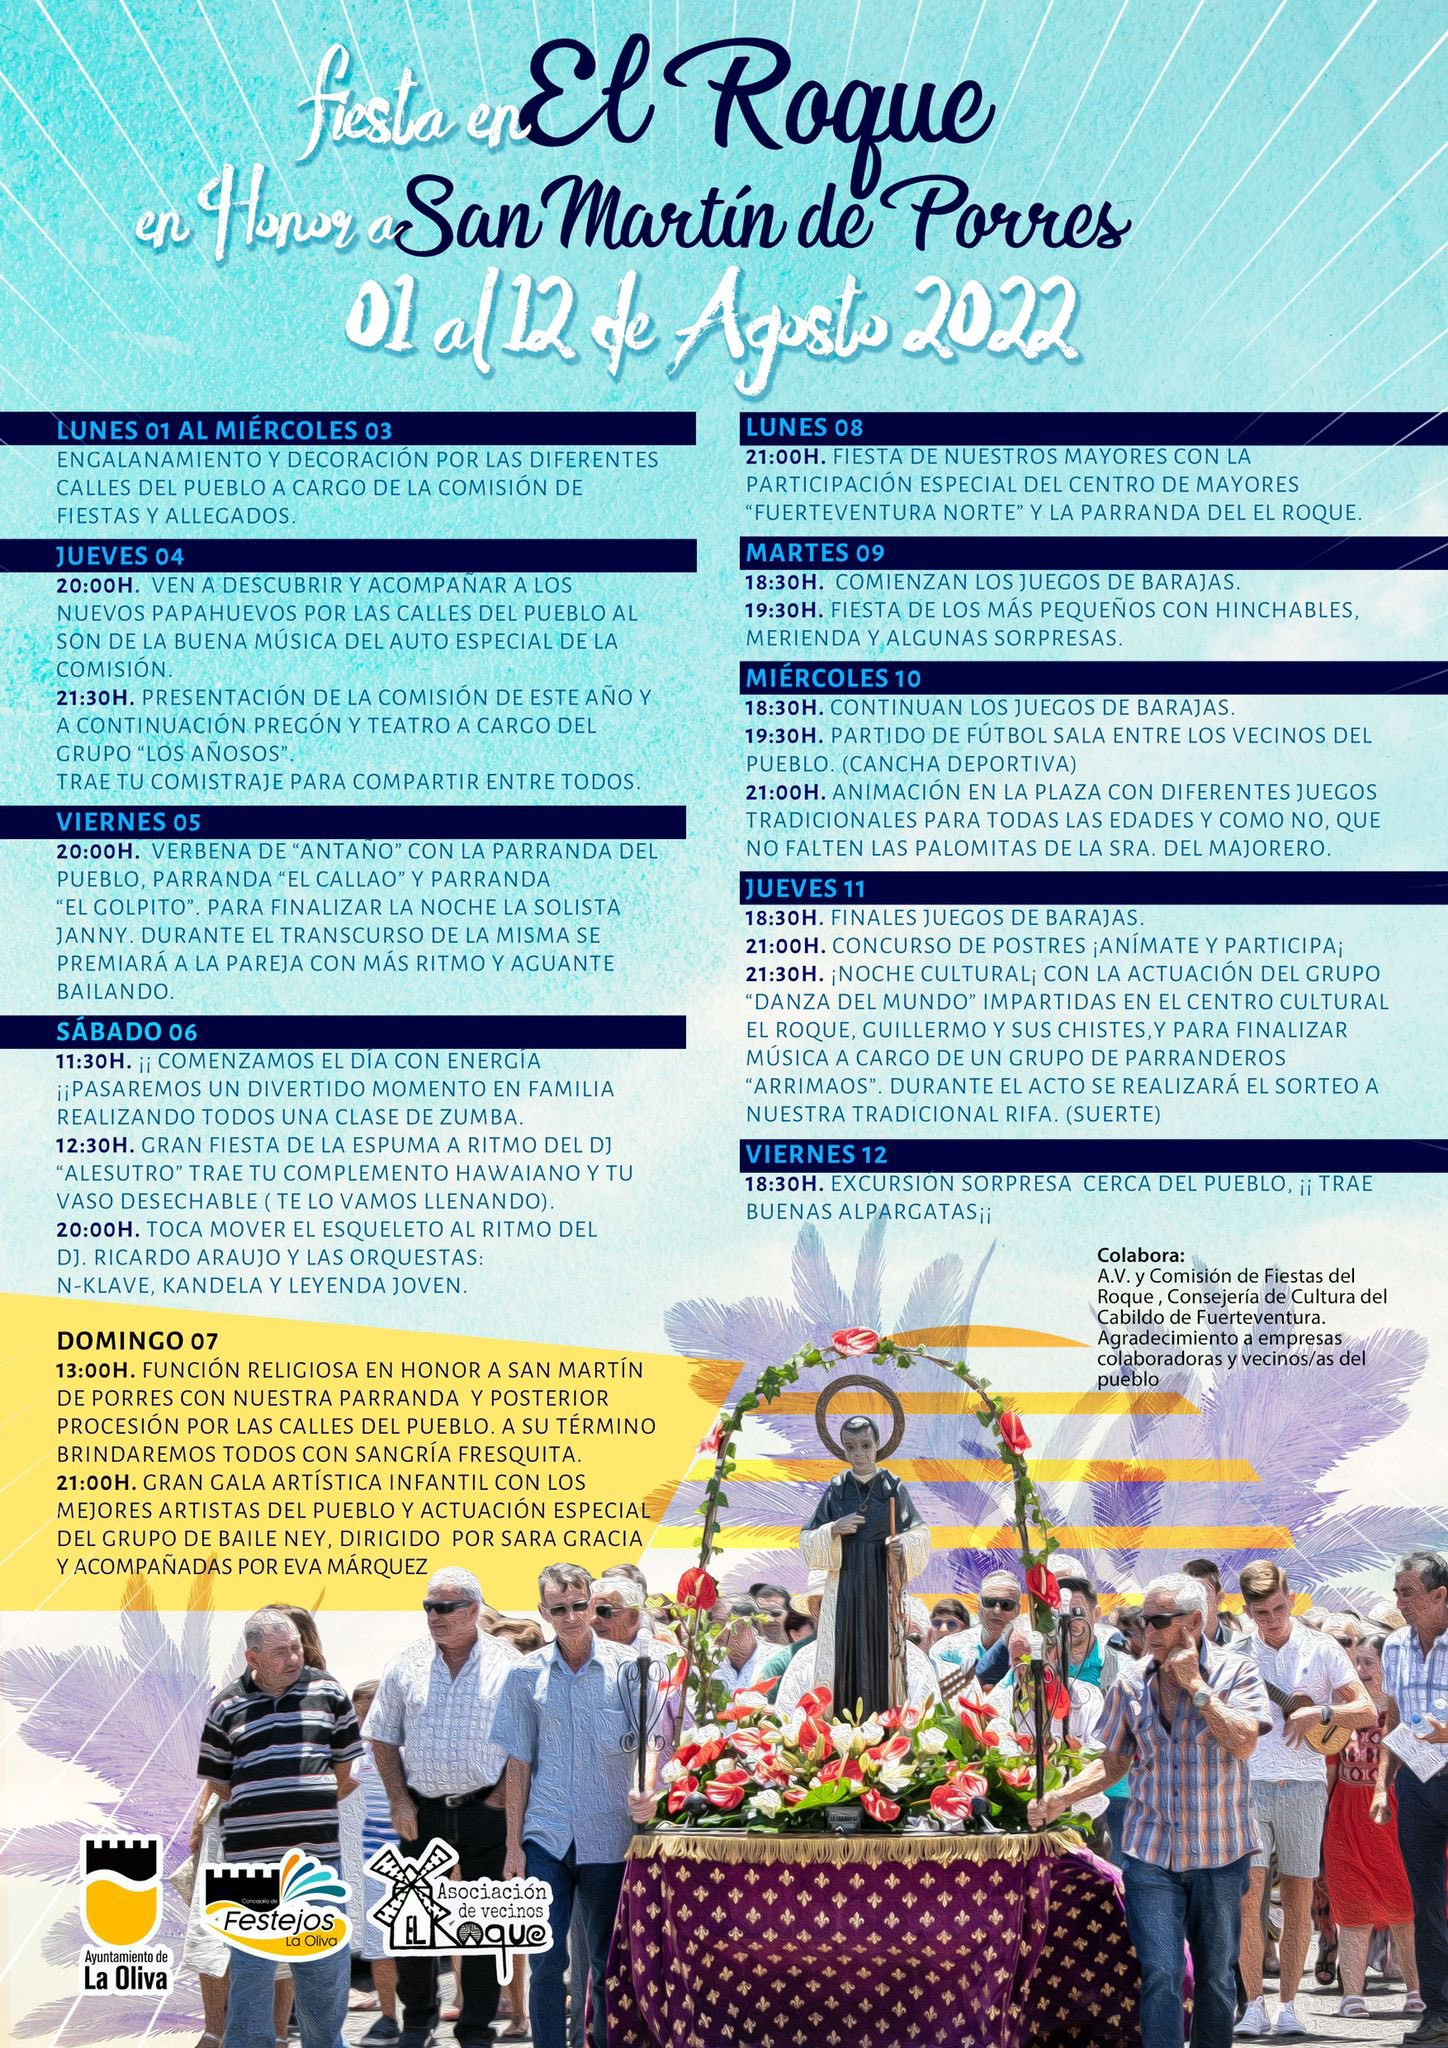 The 2022 Fiesta in honour of San Martin Porres El Roque 